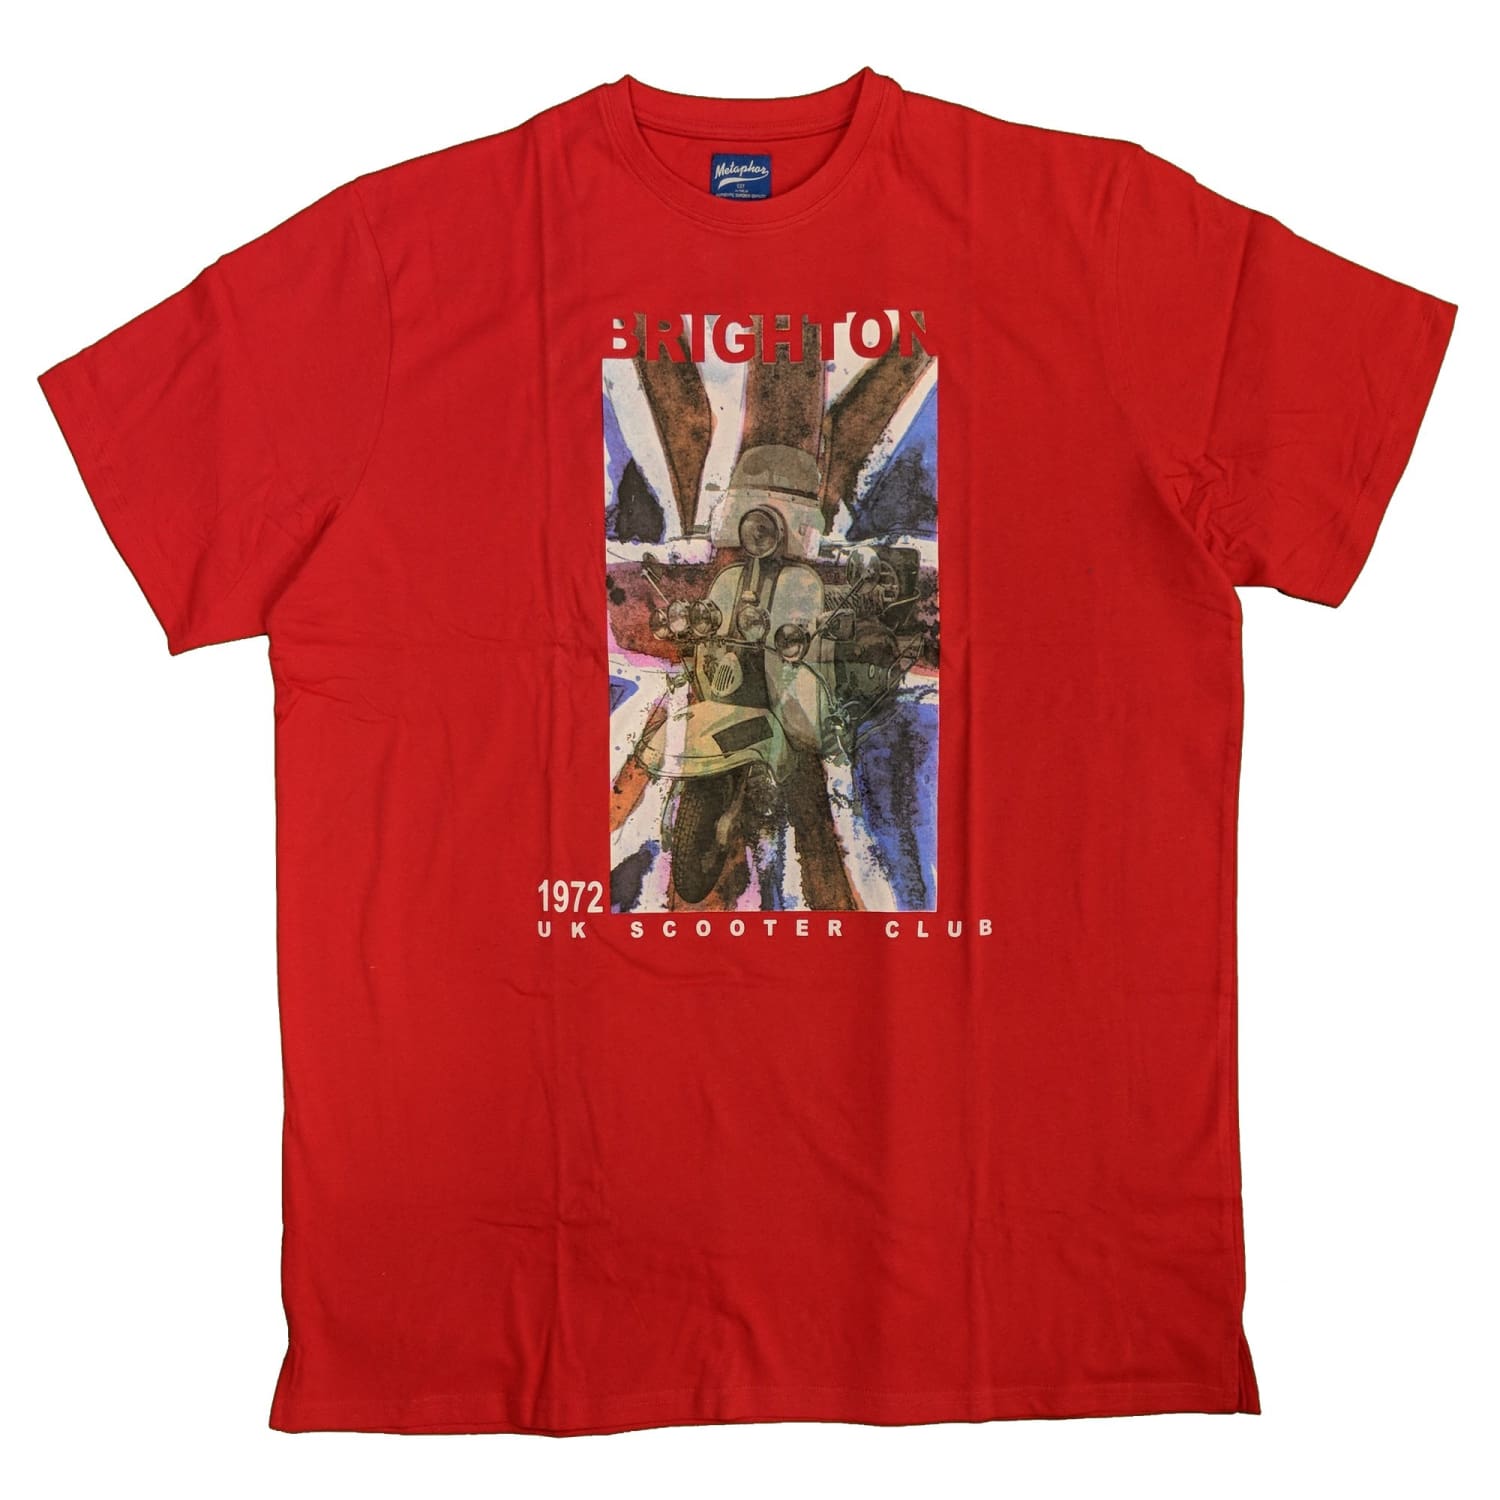 Metaphor T-Shirt - 04019 - Red (Brighton) 1